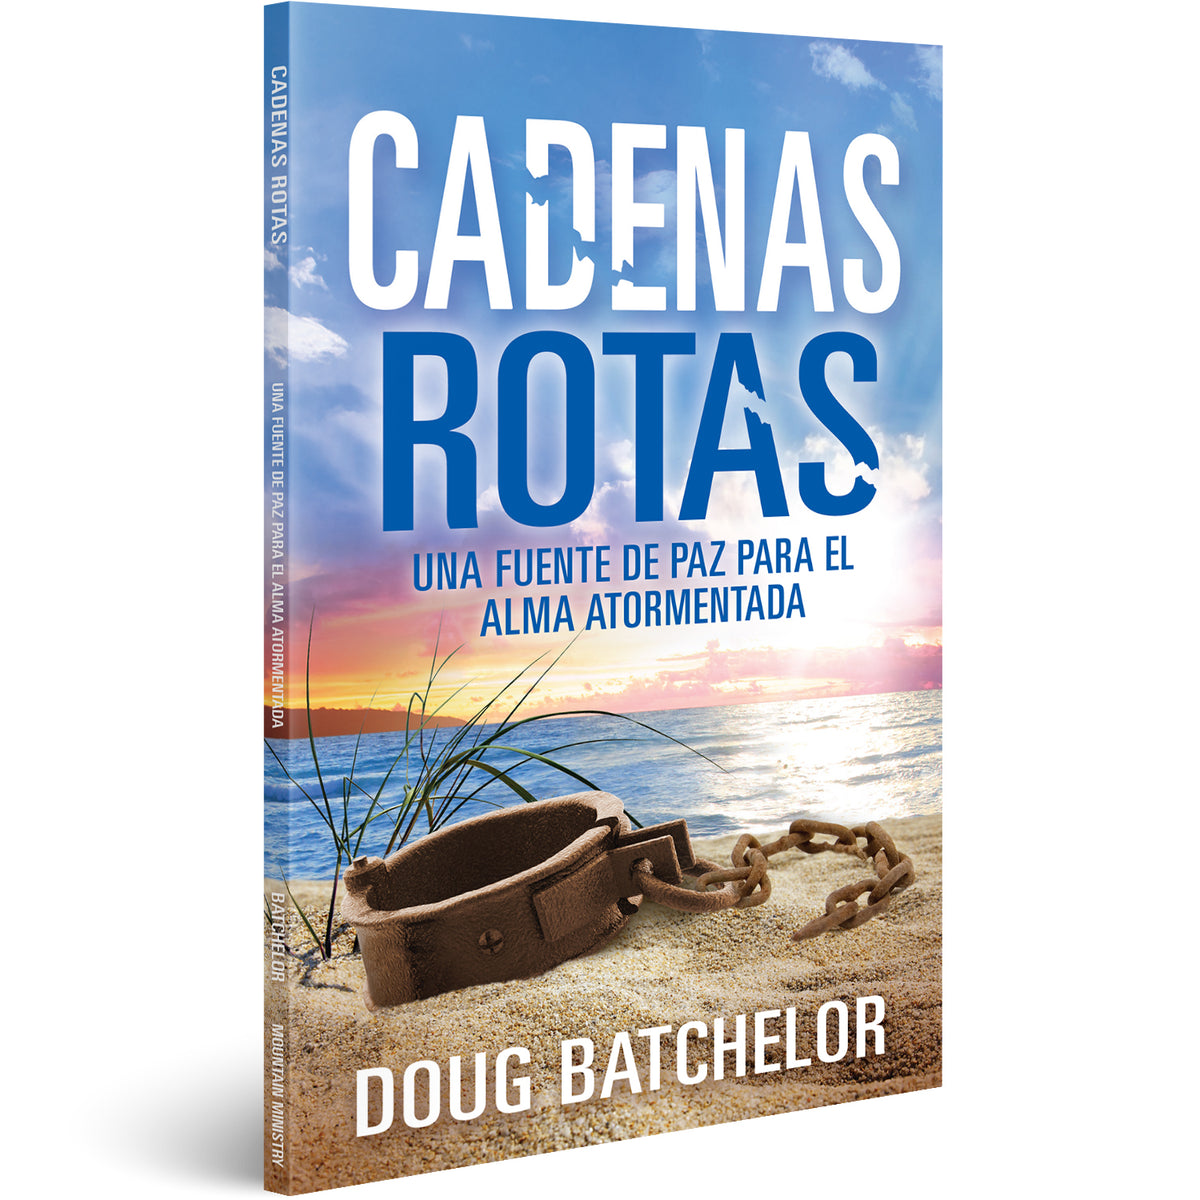 Cadenas Rotas (Spanish Broken Chains)